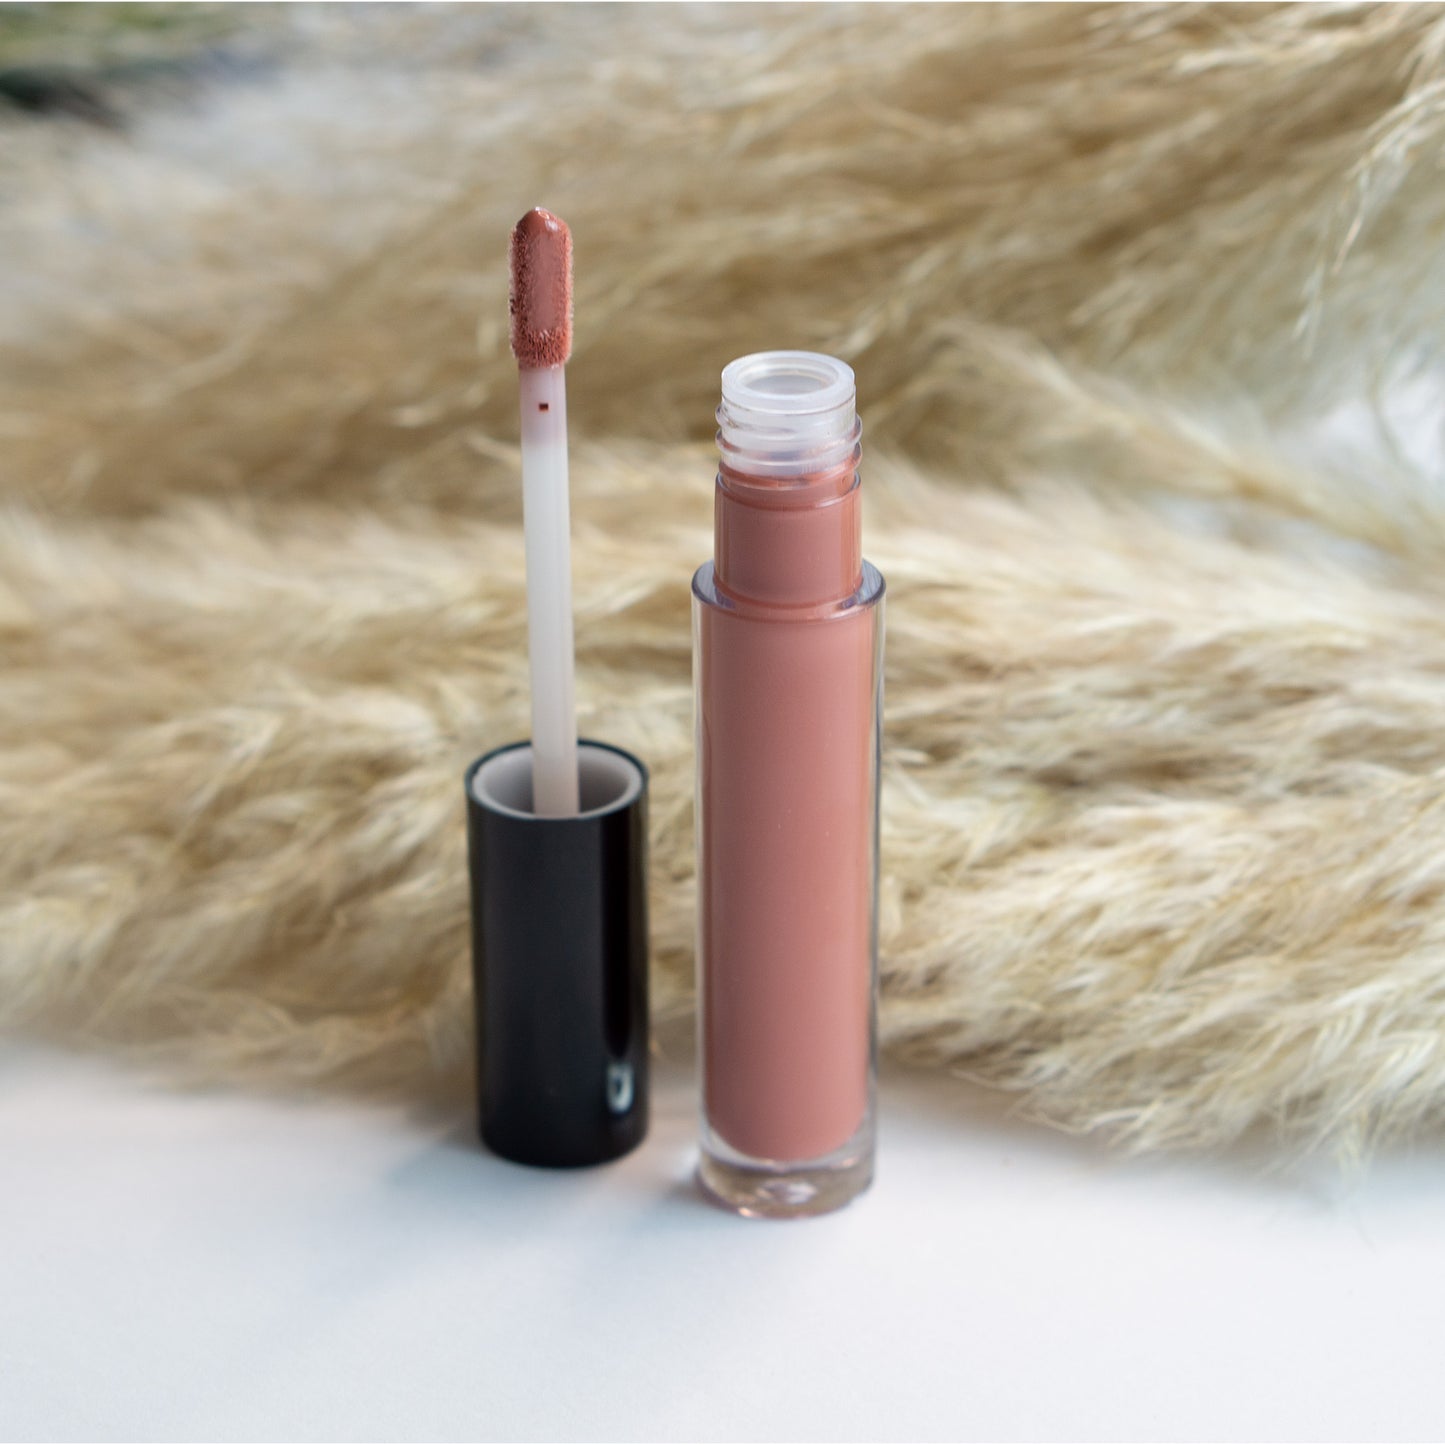 Poutastic Liquid Lip Gloss - Brick | Sheer Tint for Fuller Lips, 5 mL / 0.17 fl oz 